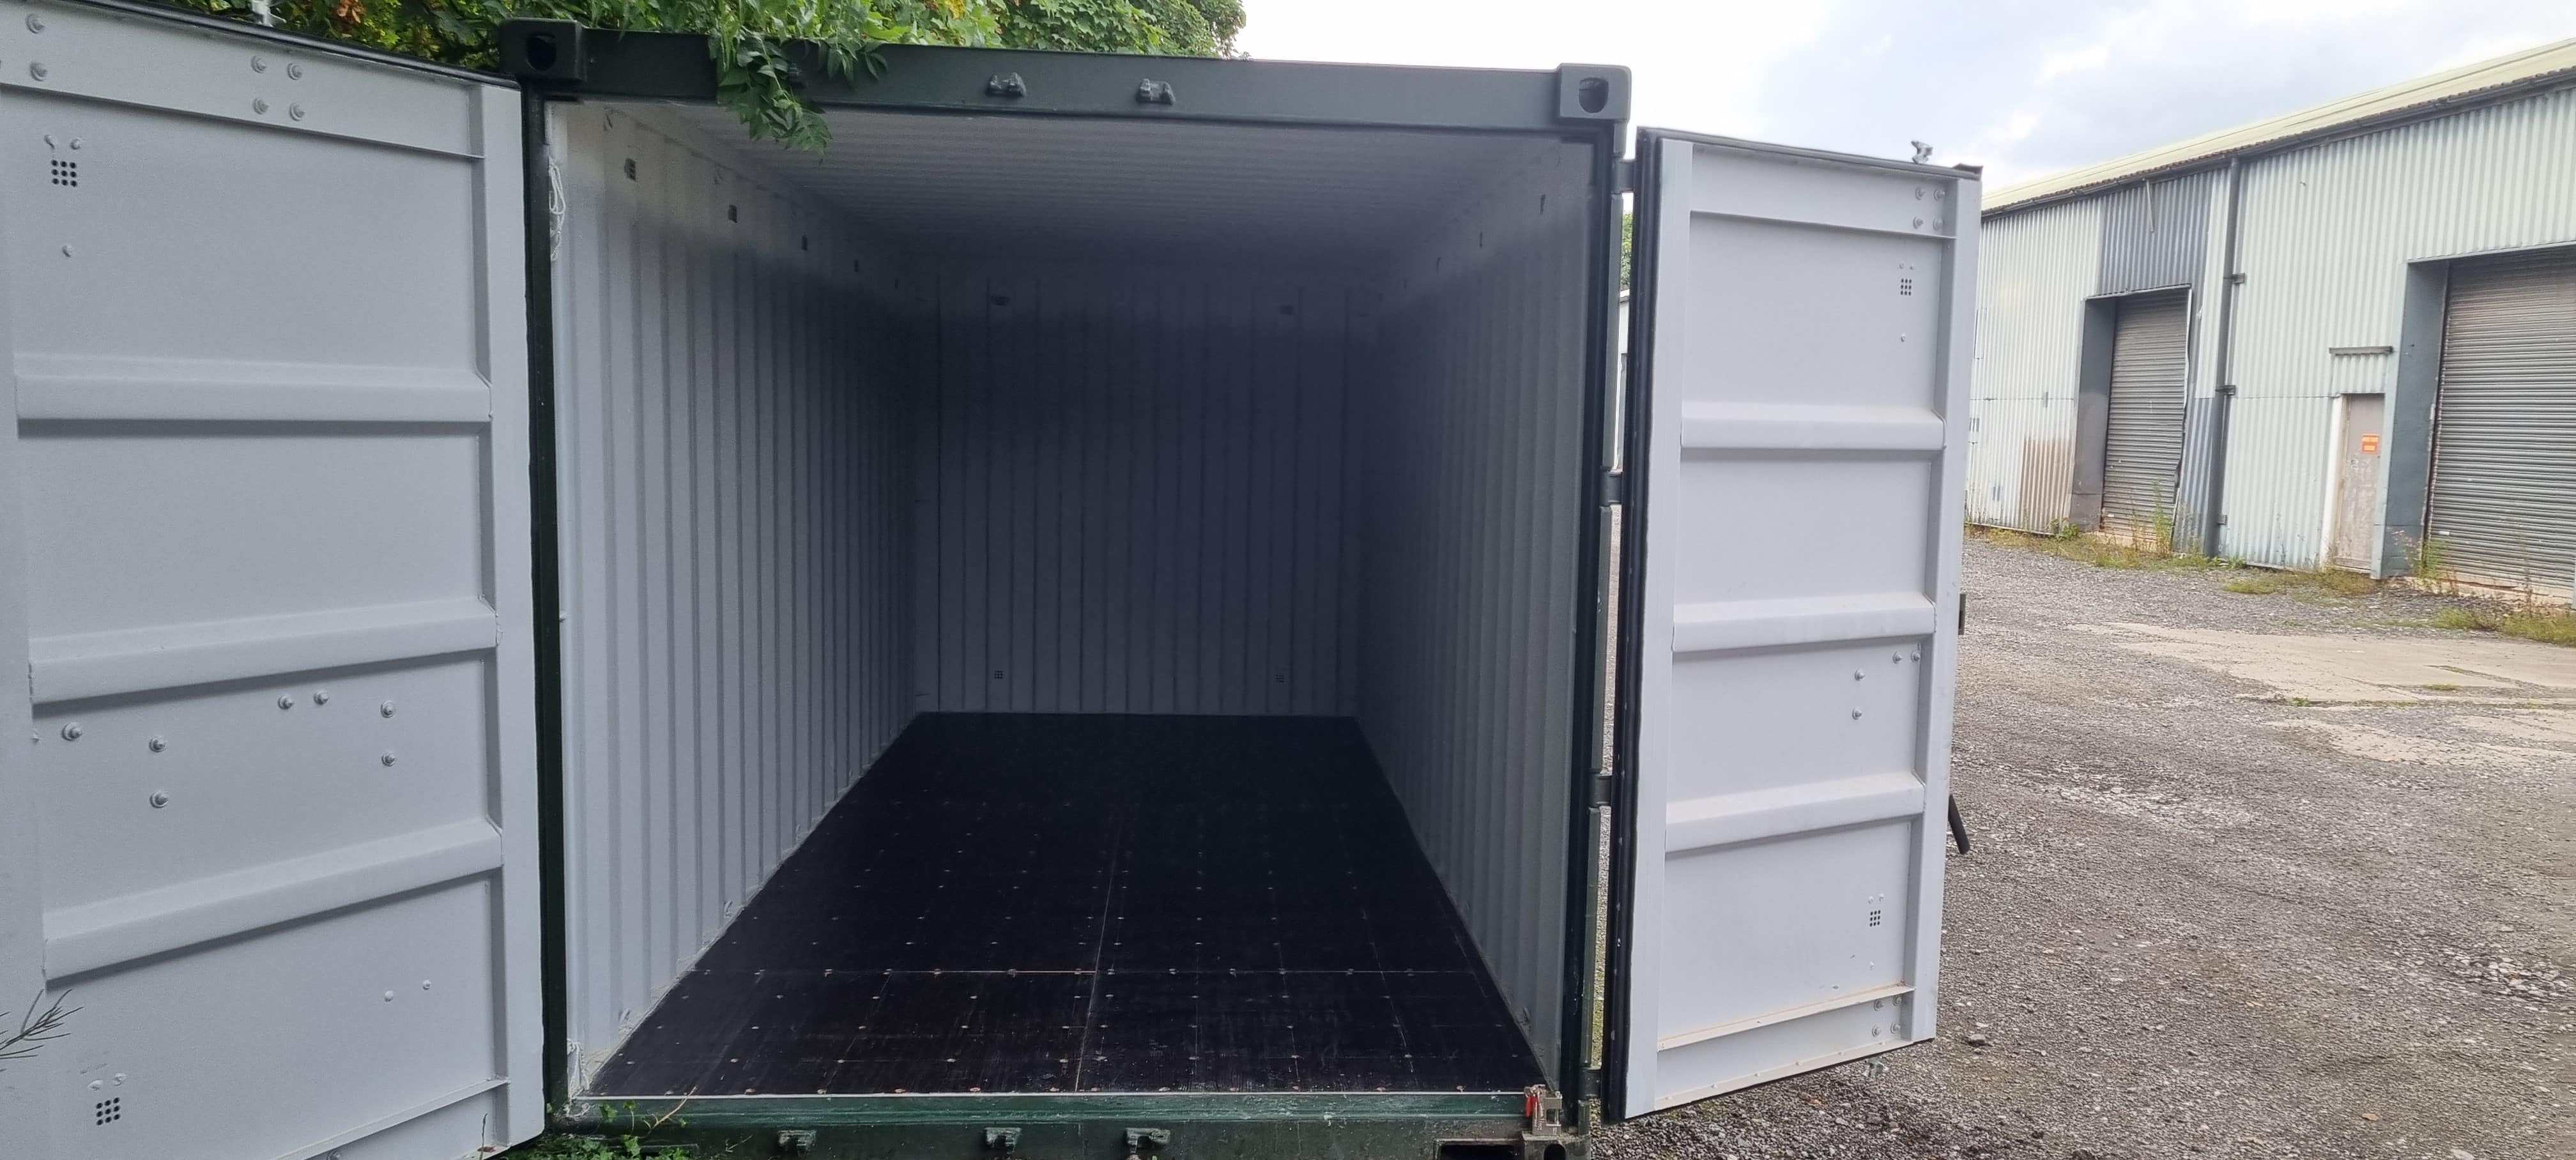 Cuboid Self Storage Eccleston - Chorley, UK, affordable self storage